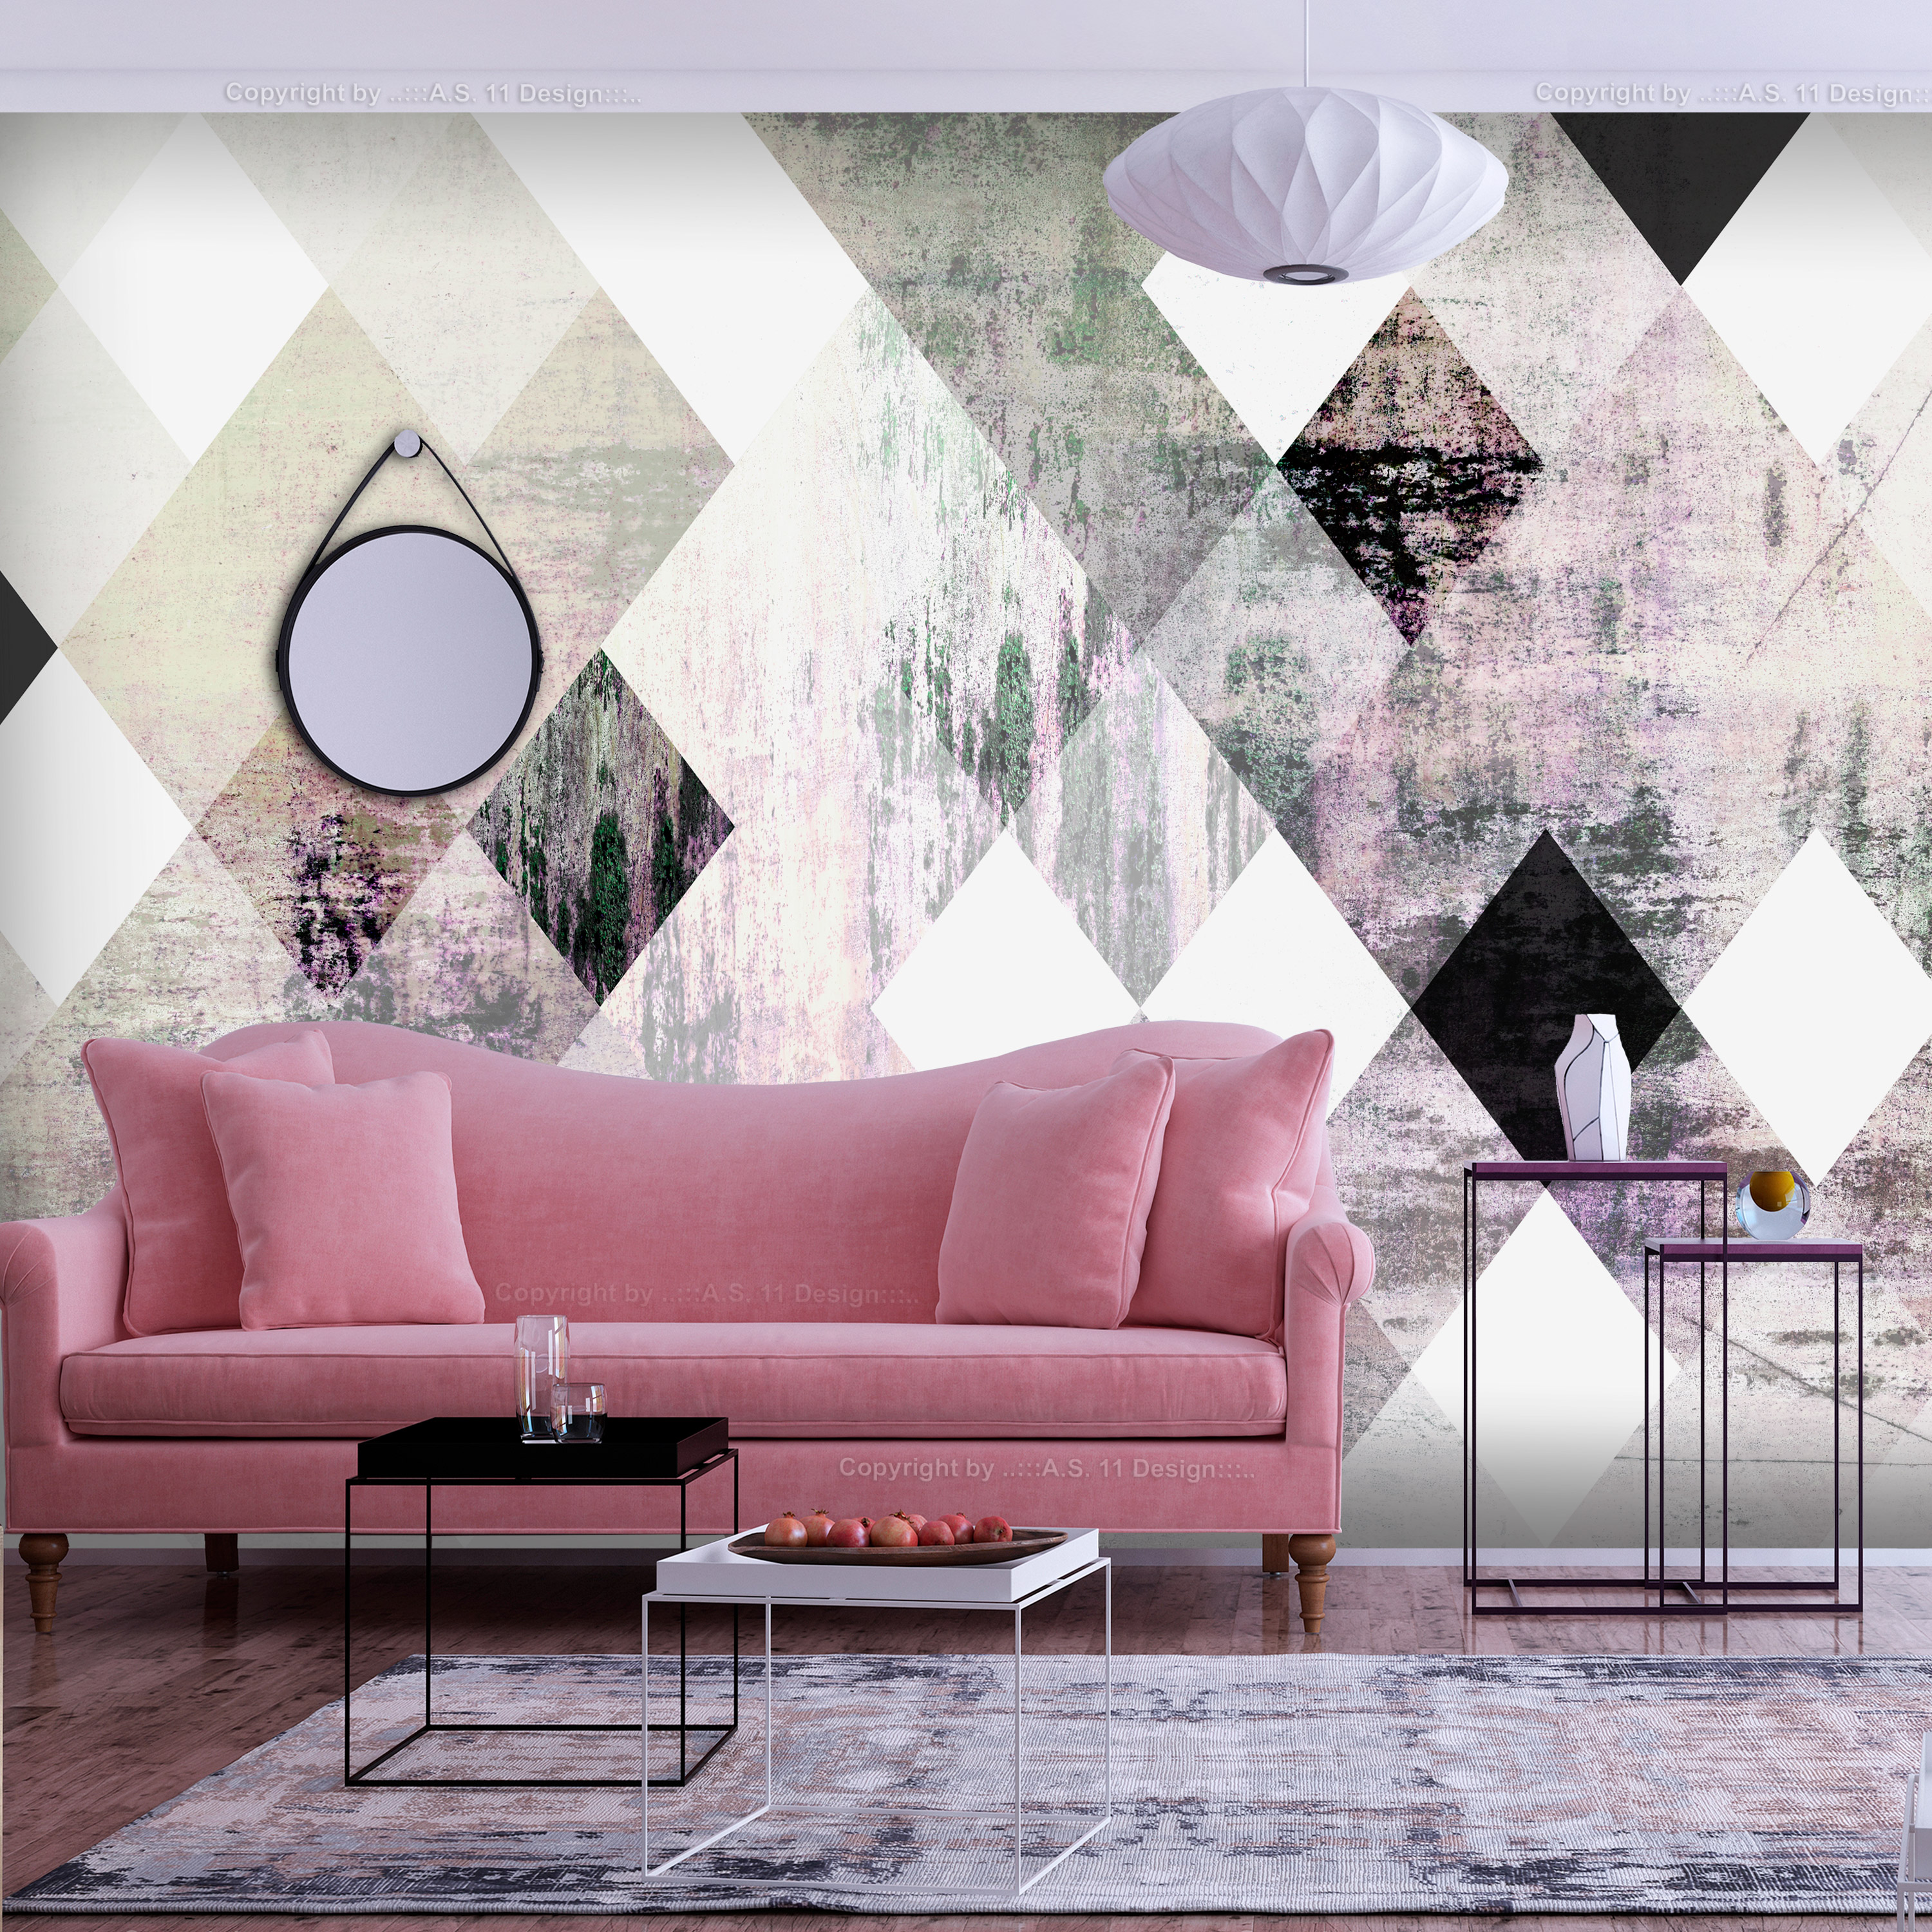 Self-adhesive Wallpaper - Rhombic Chessboard (Pink) - 343x245